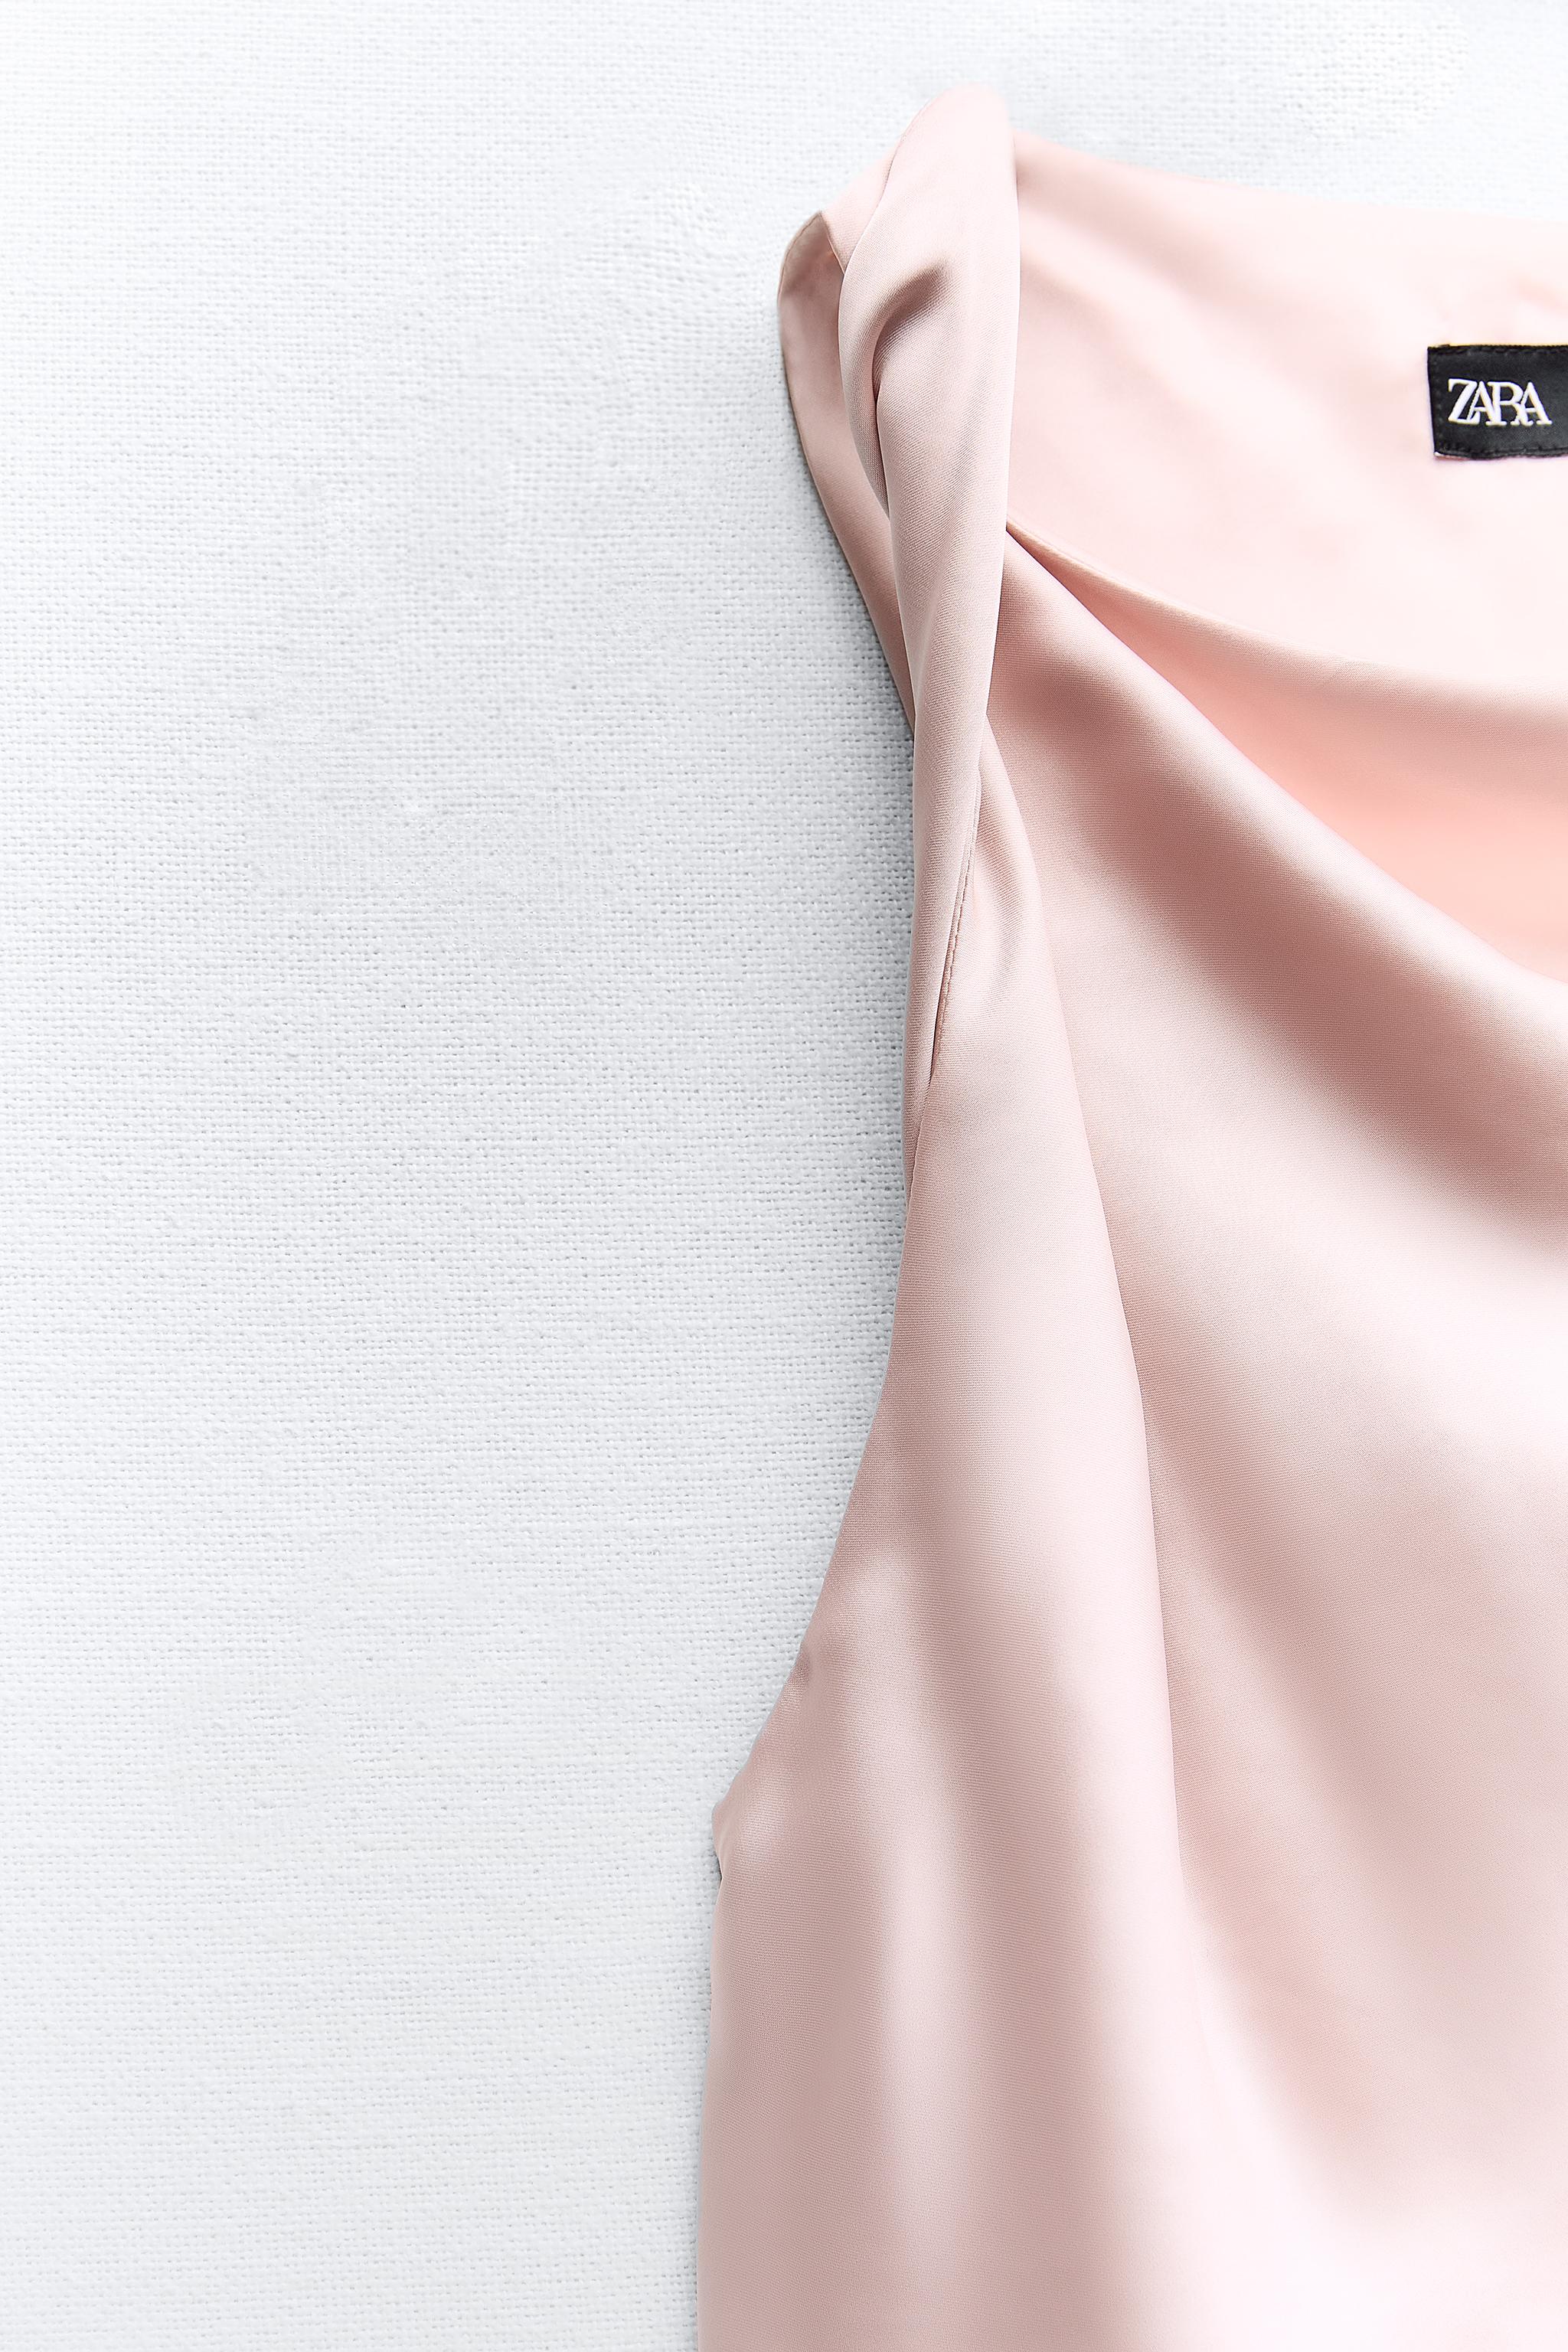 Zara, Tops, Zara Silk Satin Crop Top Bralette Pink